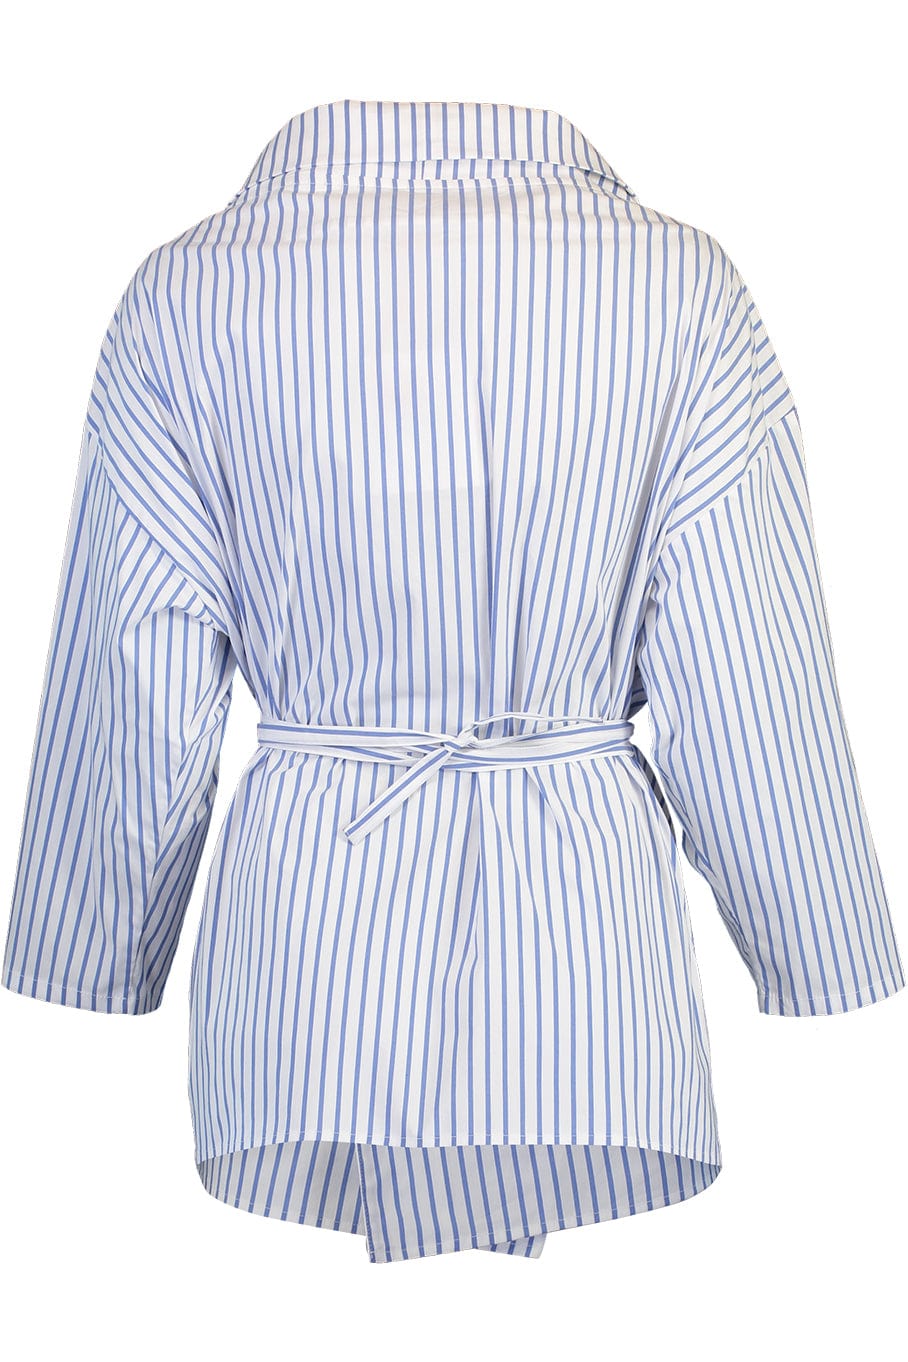 STELLA JEAN-Long Sleeve Stripe Wrap Style Blouse-